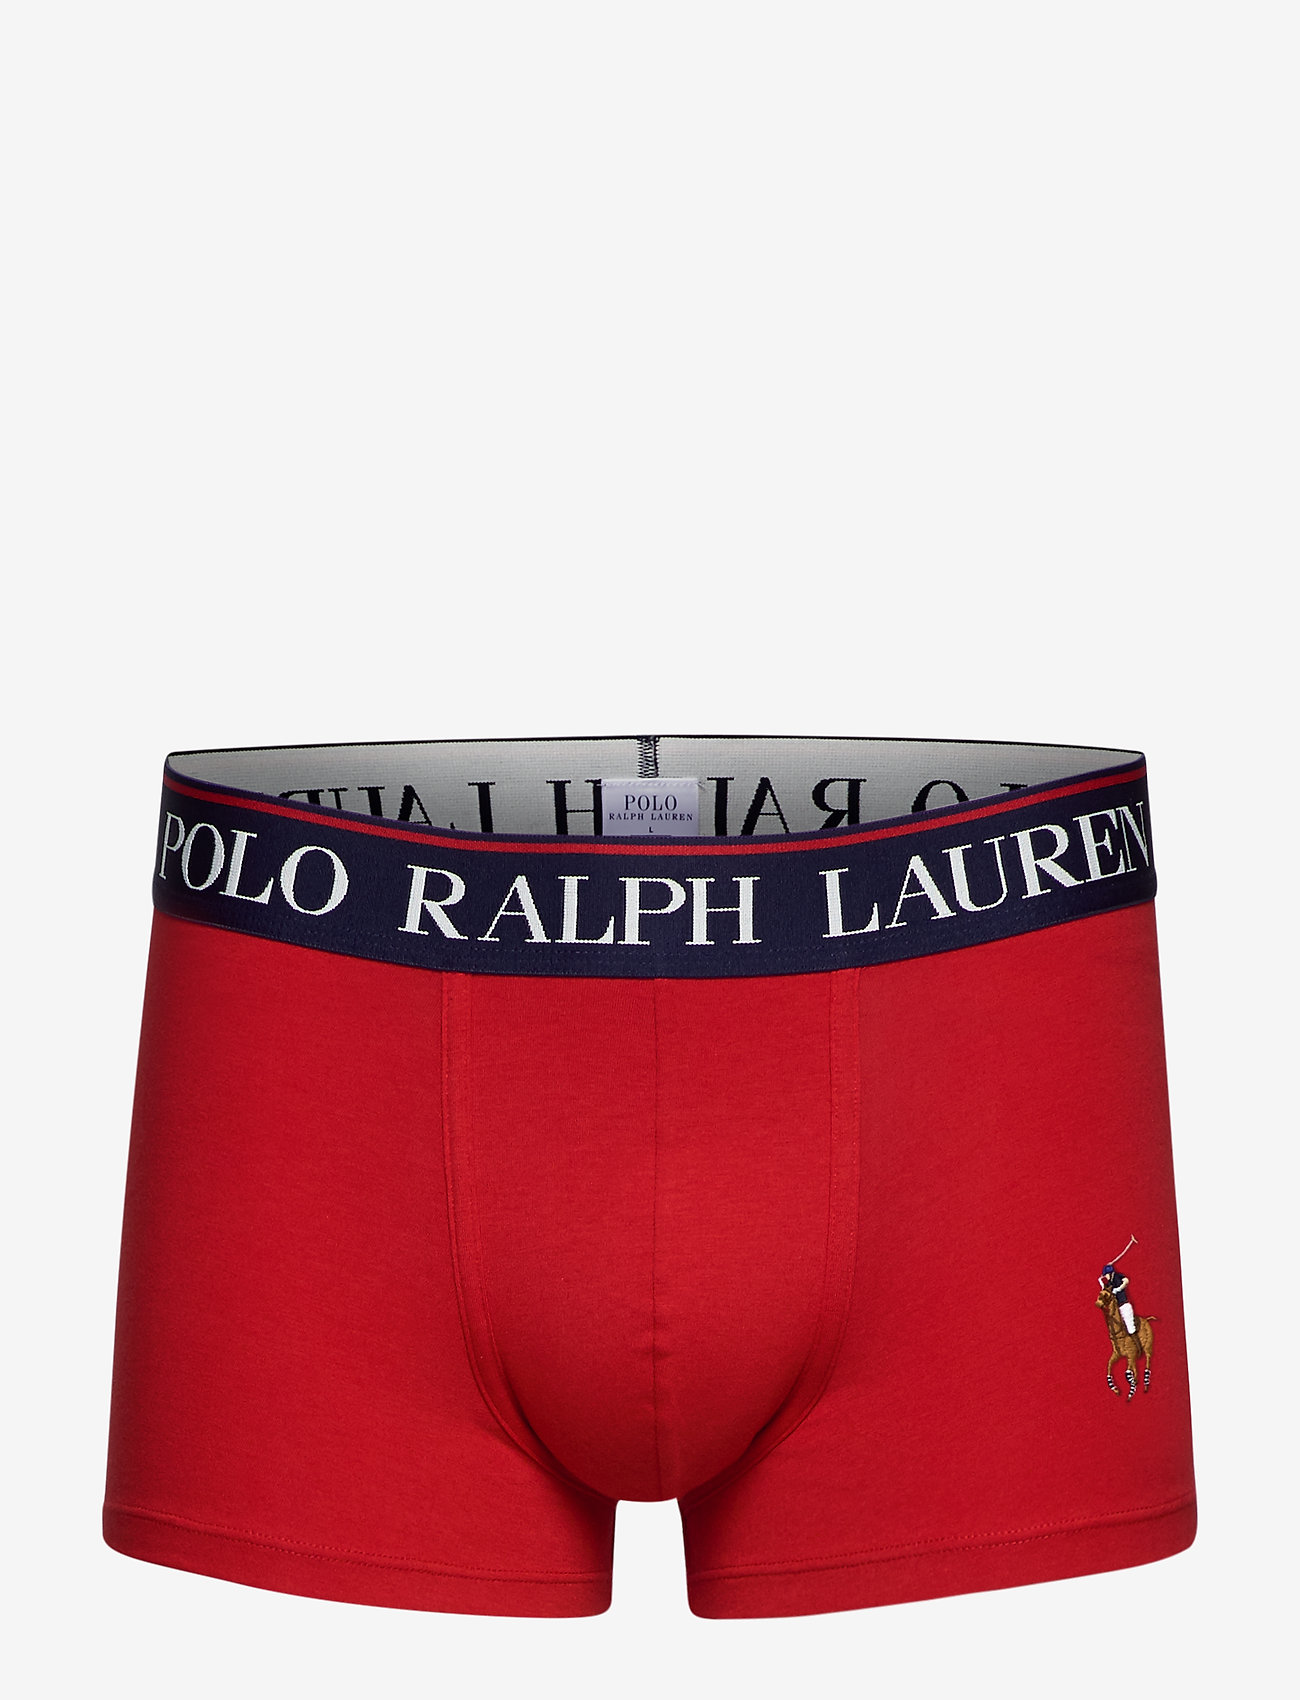 Stretch Cotton Trunks (Rl 2000 Red Multi) (177 kr) - Polo Ralph Lauren